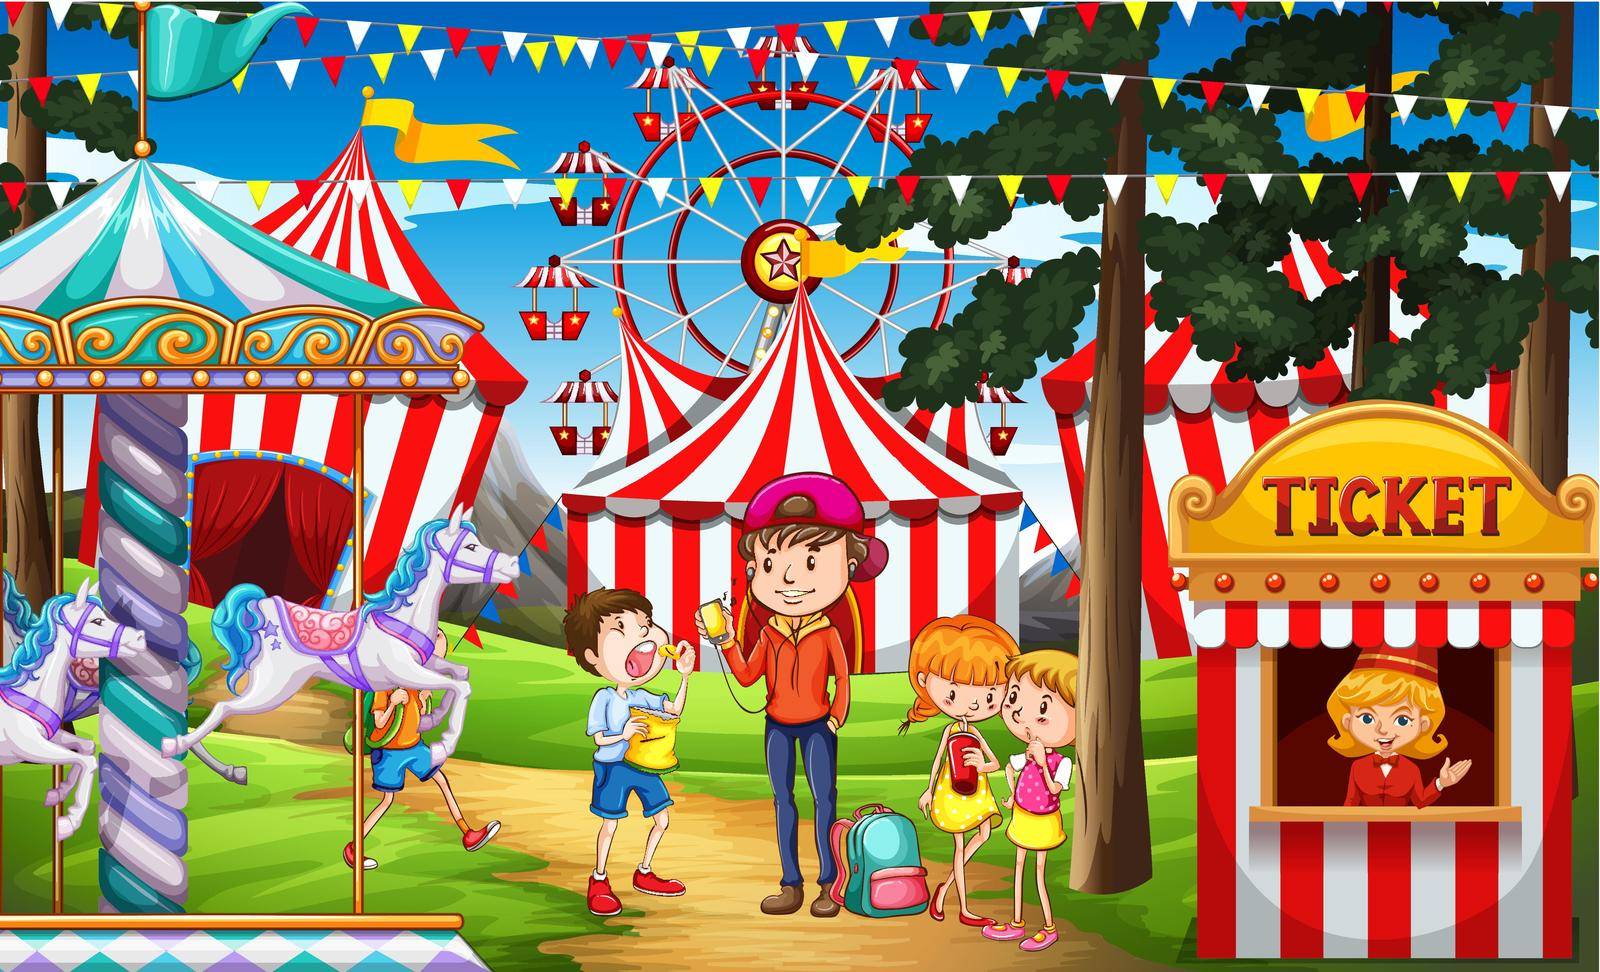 People having fun at the circus illustration